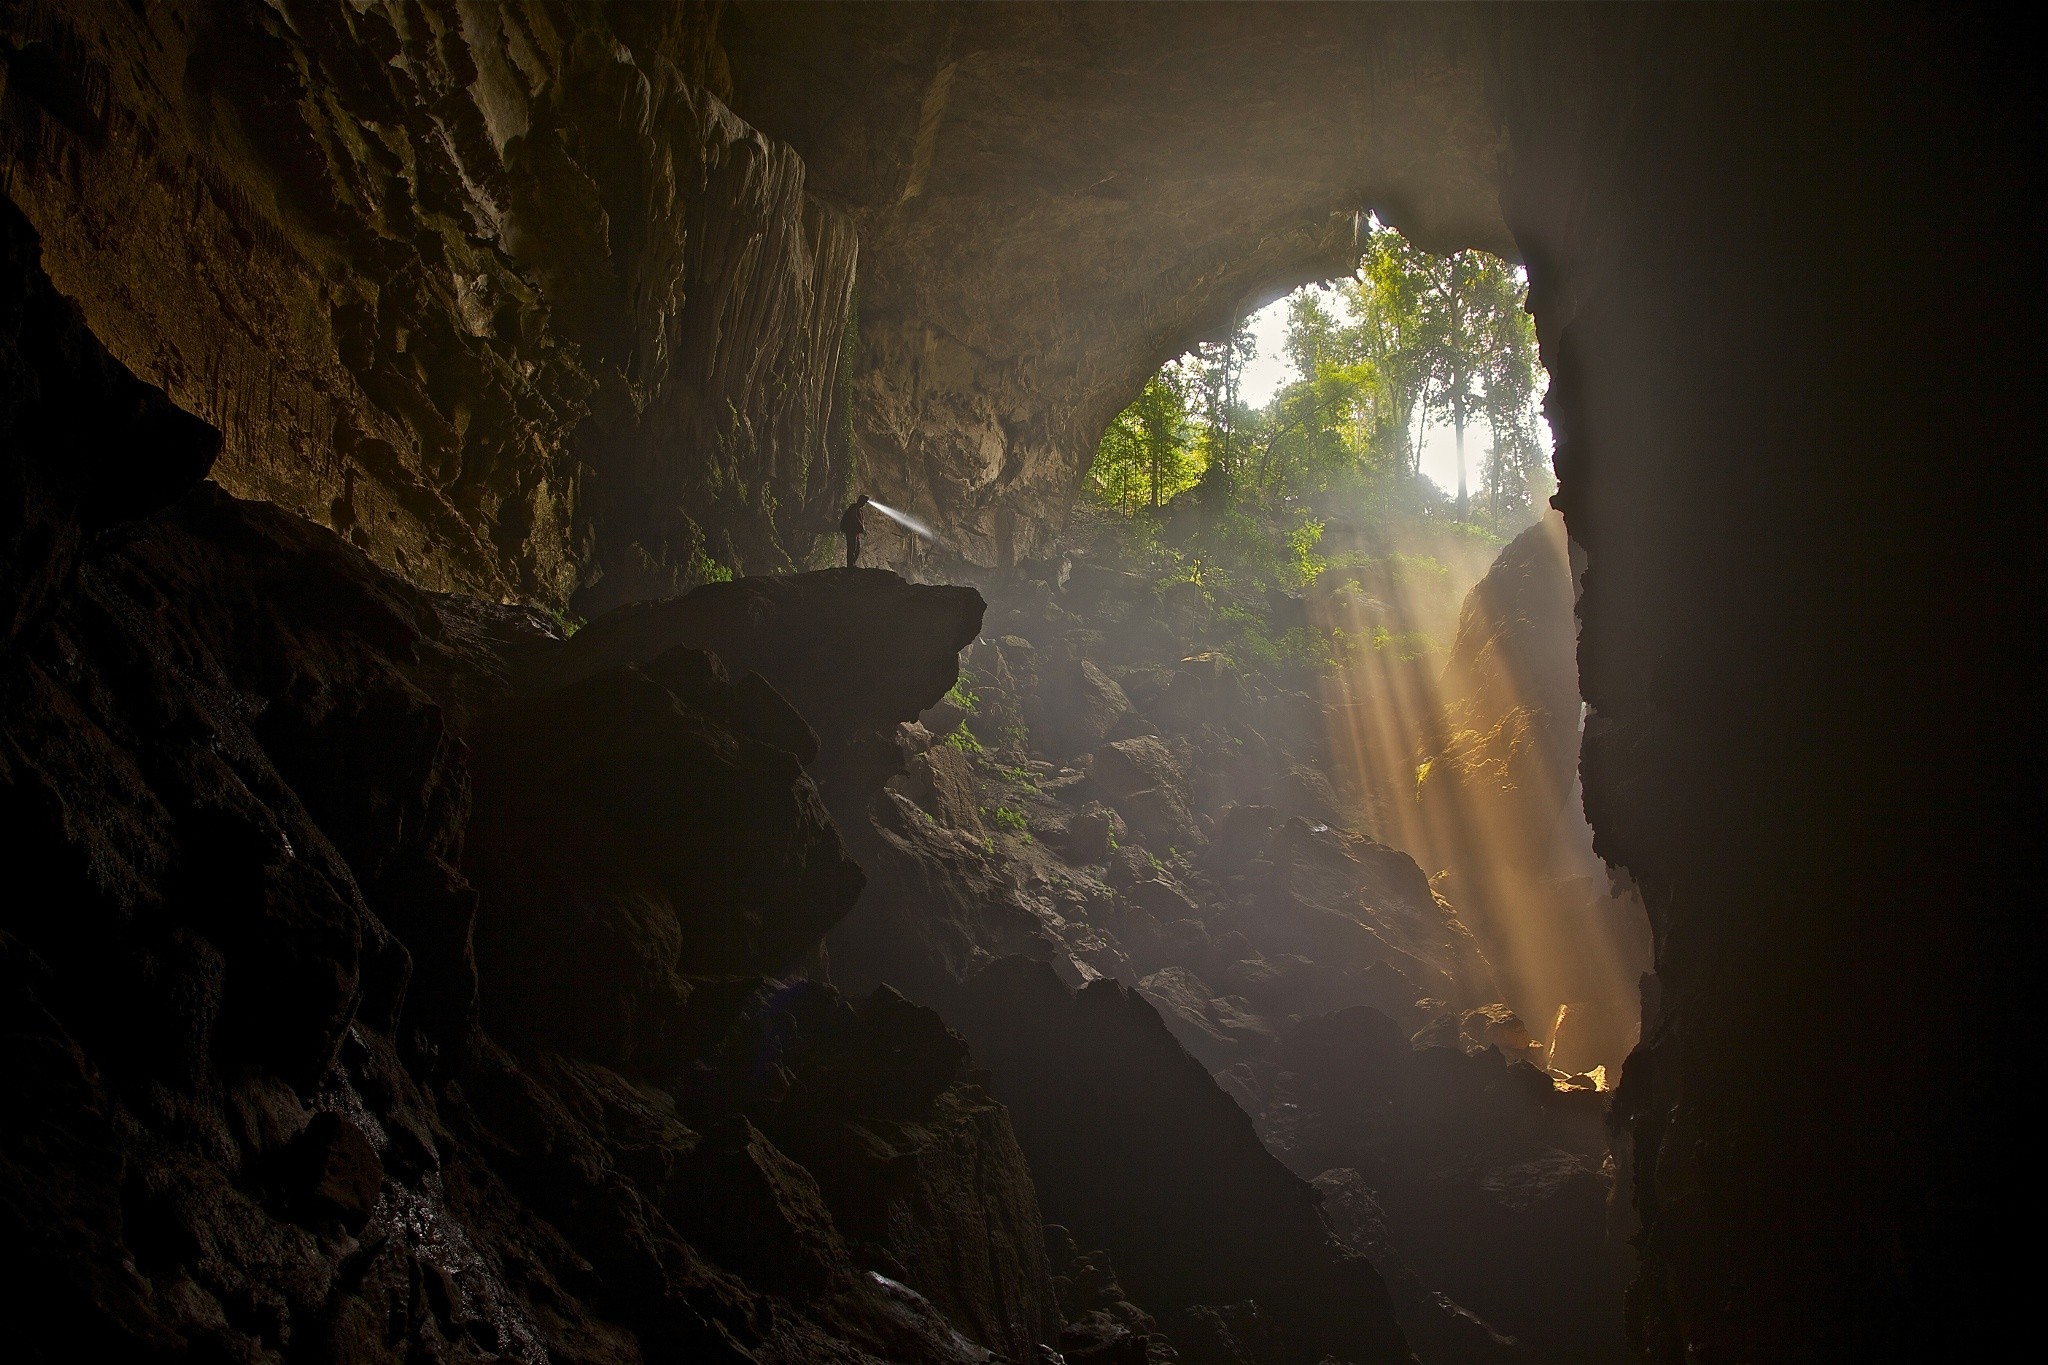 General 2048x1365 500px photography cave men Thailand underground nature